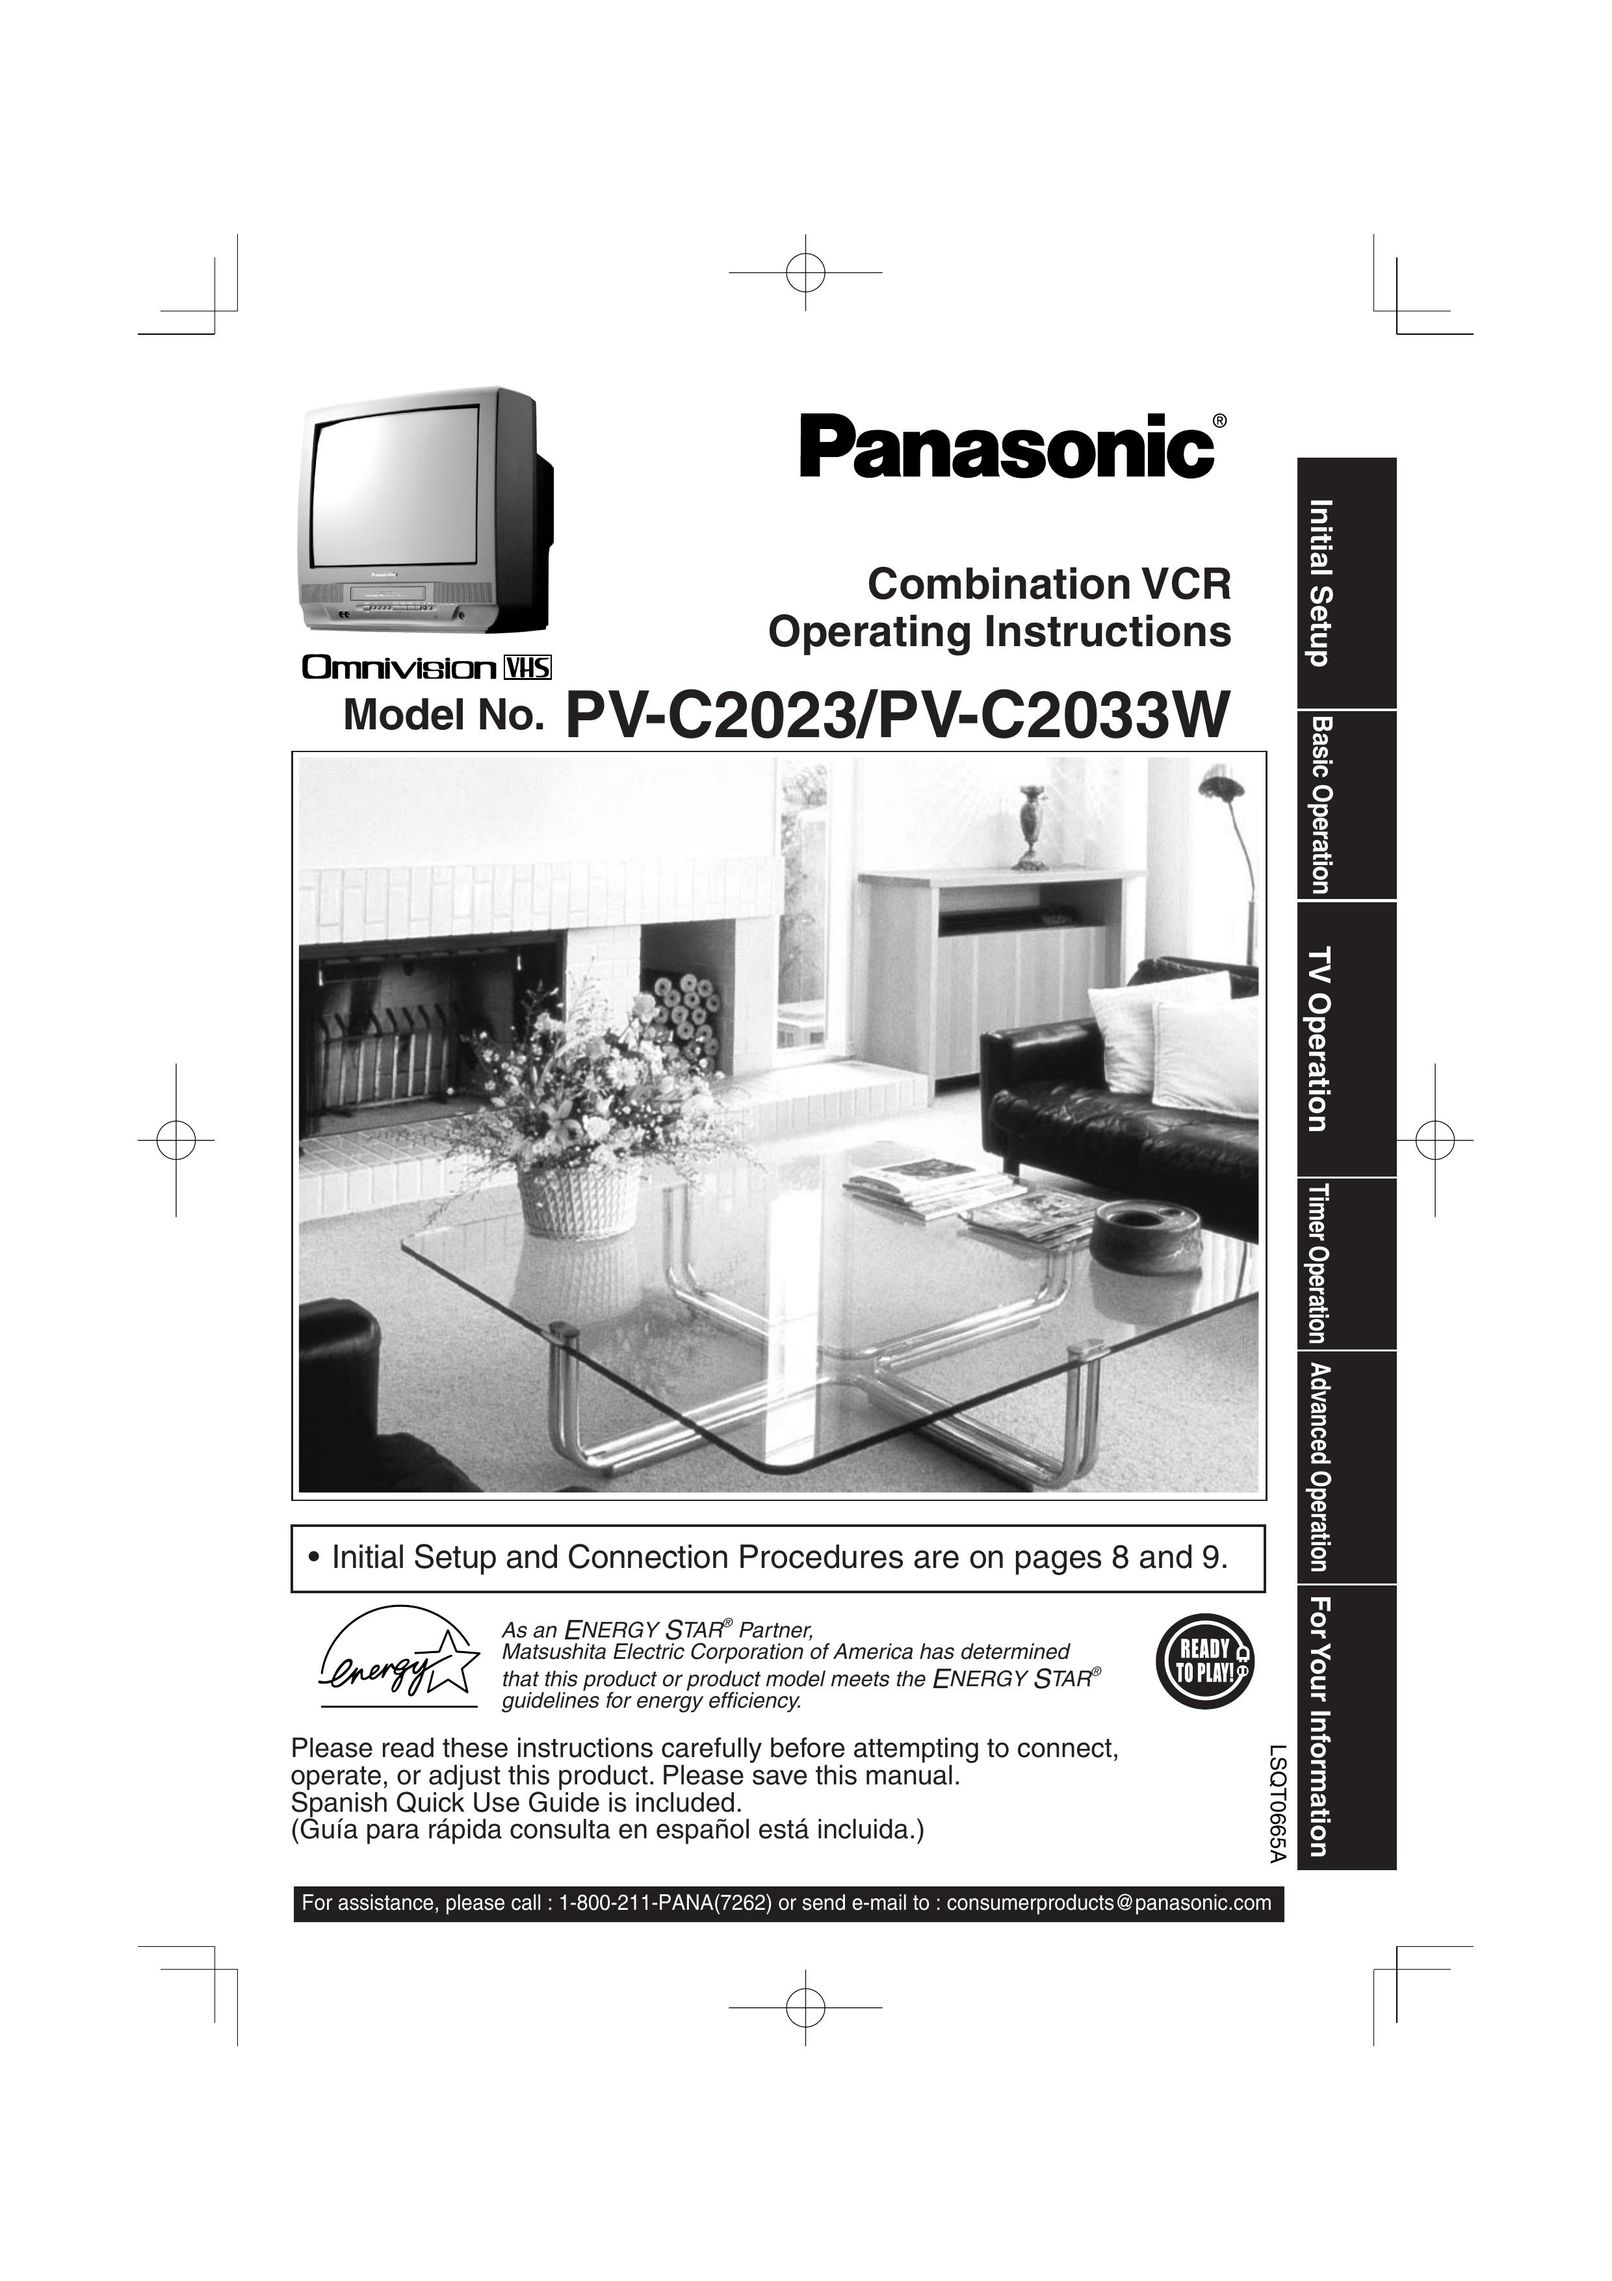 Panasonic PV C2033W TV VCR Combo User Manual